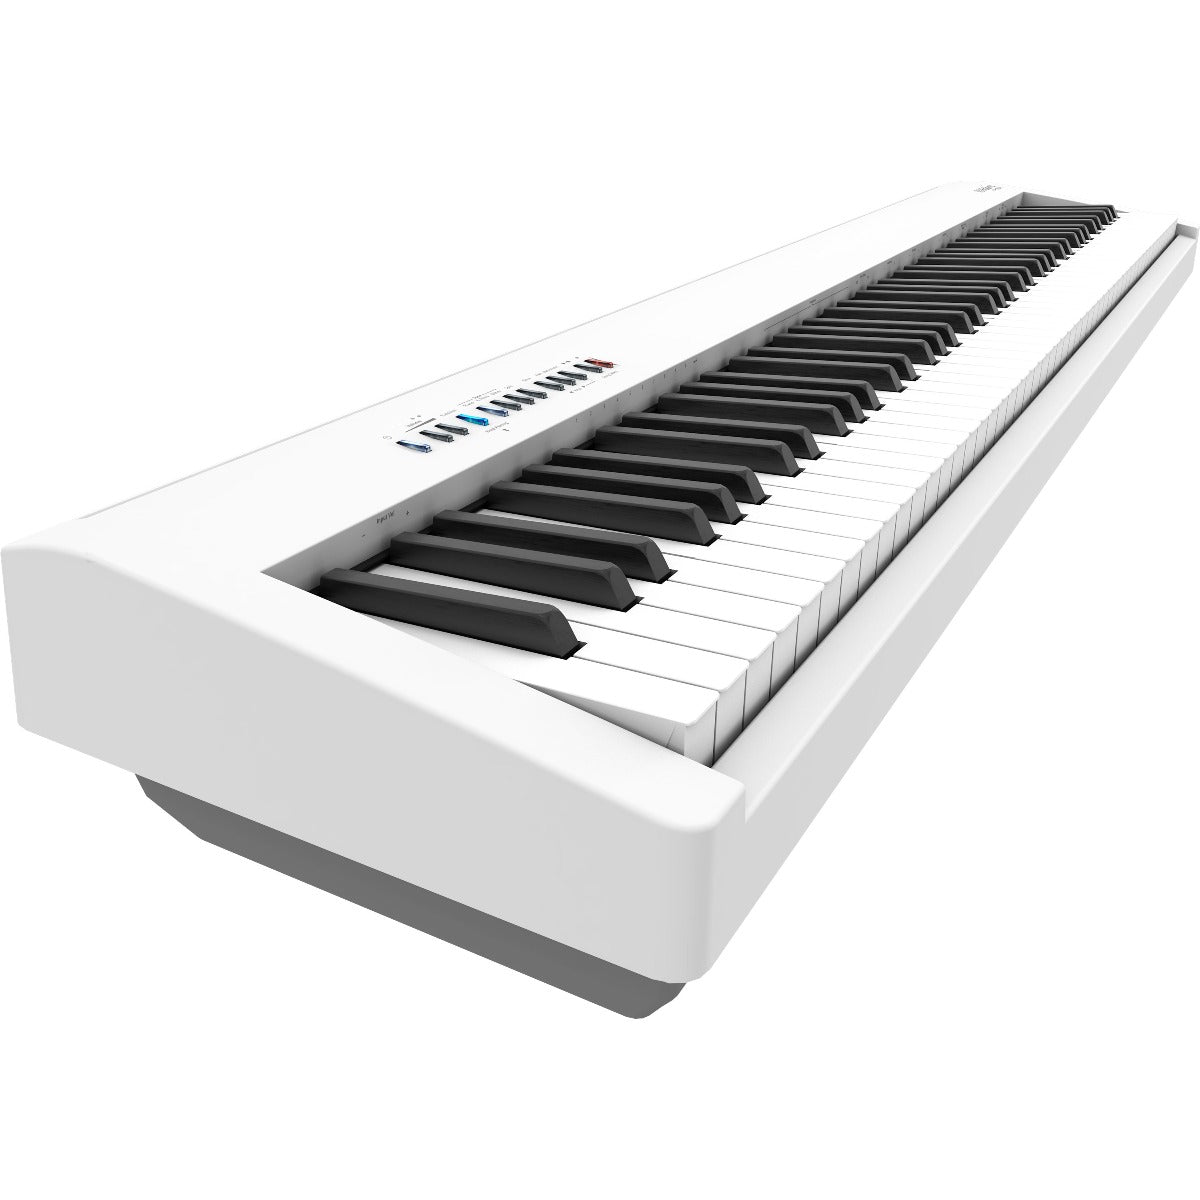 Roland FP-10 Digital Piano Review & Demo - SuperNATURAL Piano, Bluetooth  Audio, PHA-4 Action